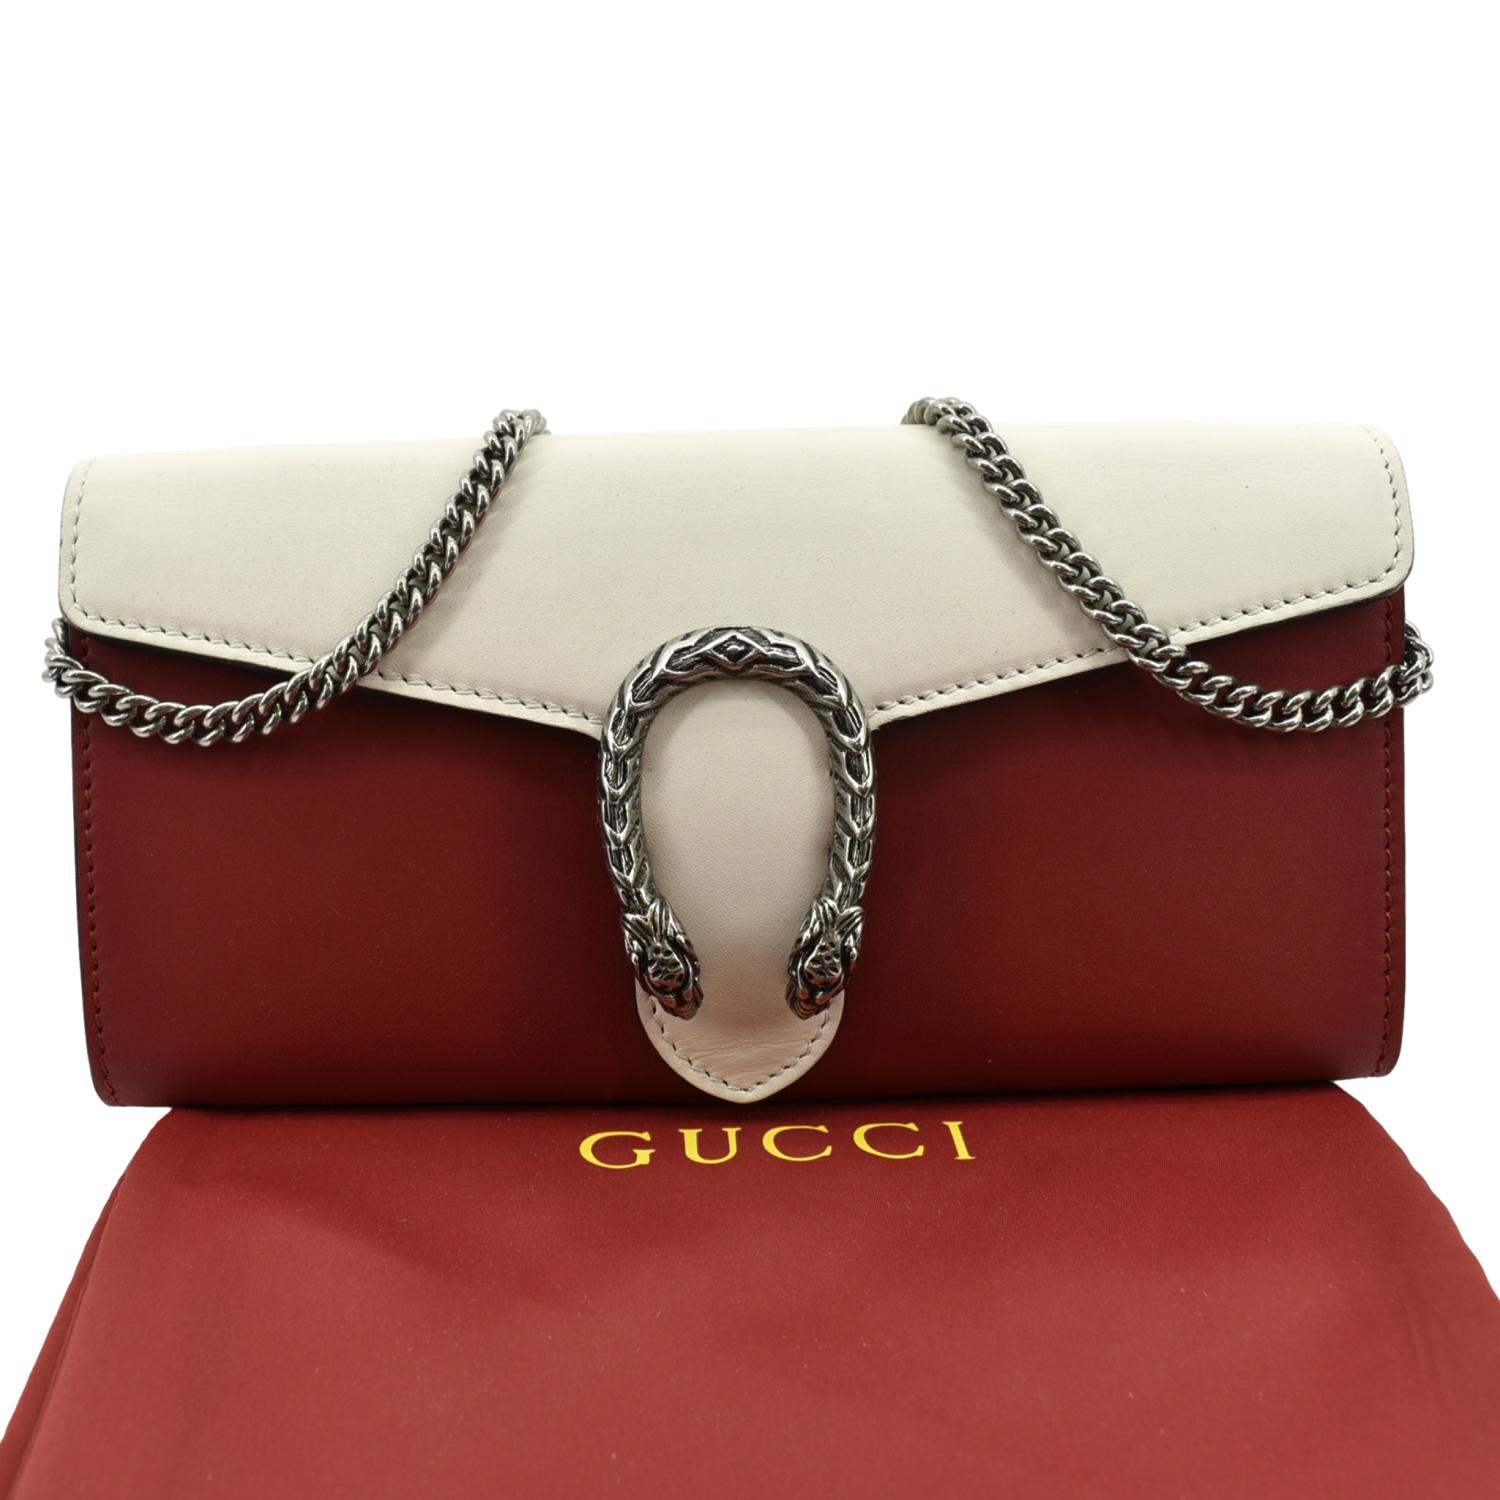 Gucci Dionysus Leather Chain Clutch